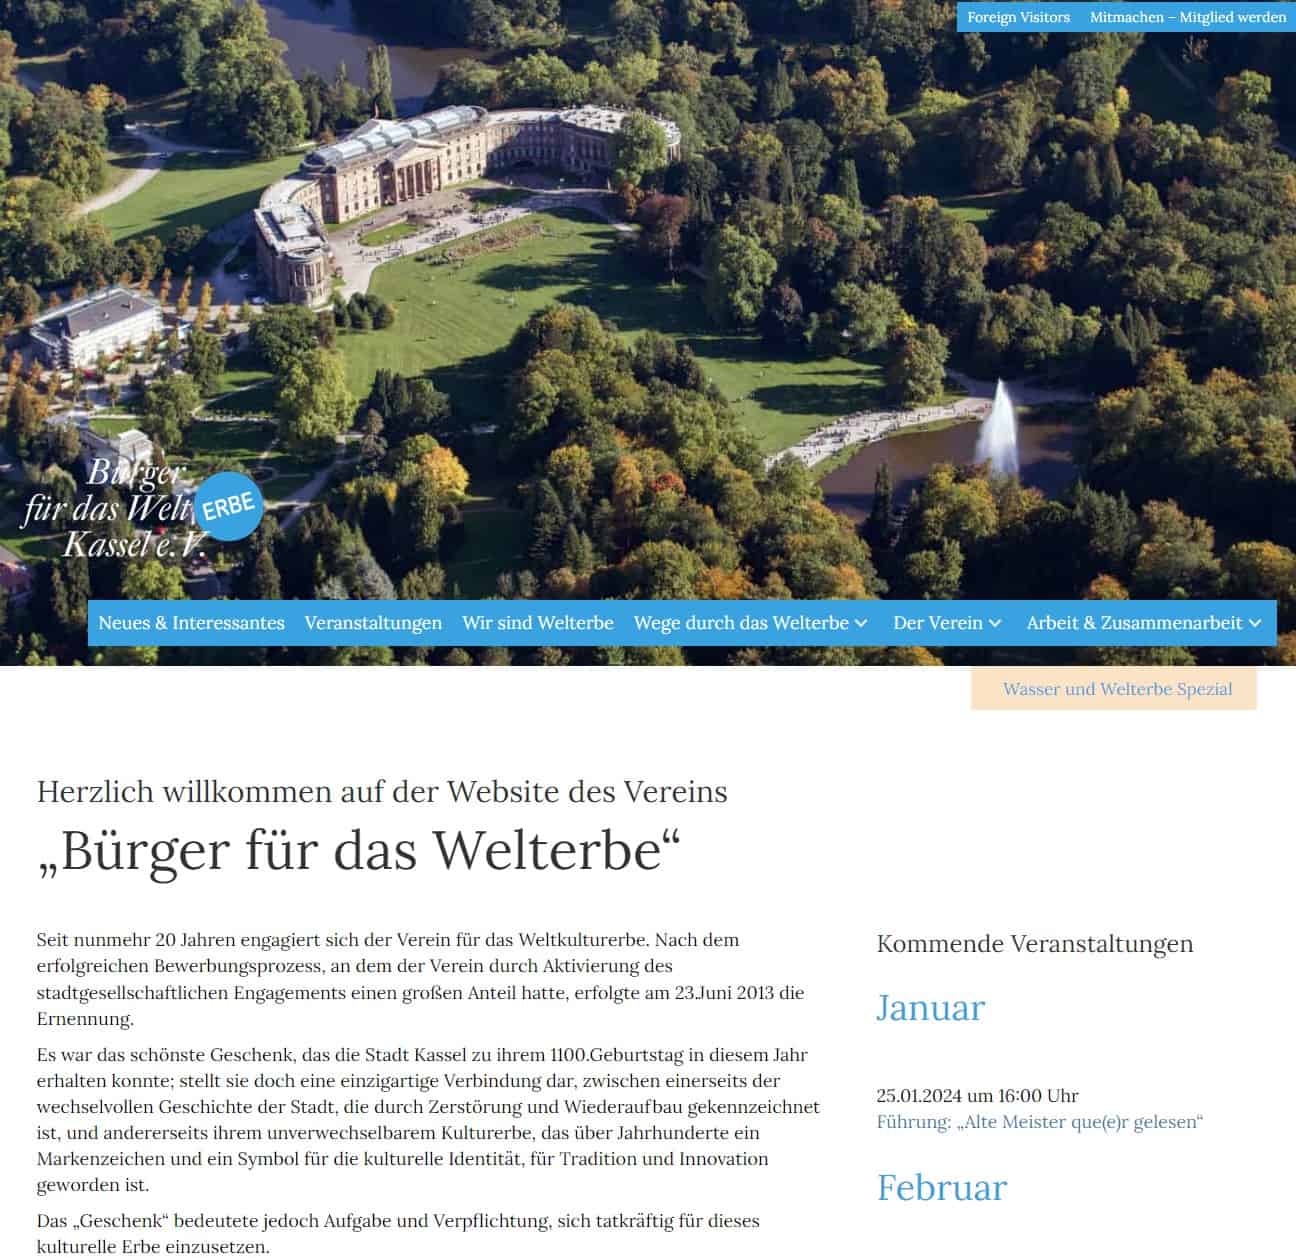 Referenz Thomas Ulbricht Webdesign: Welterbe Kassel e.V. 